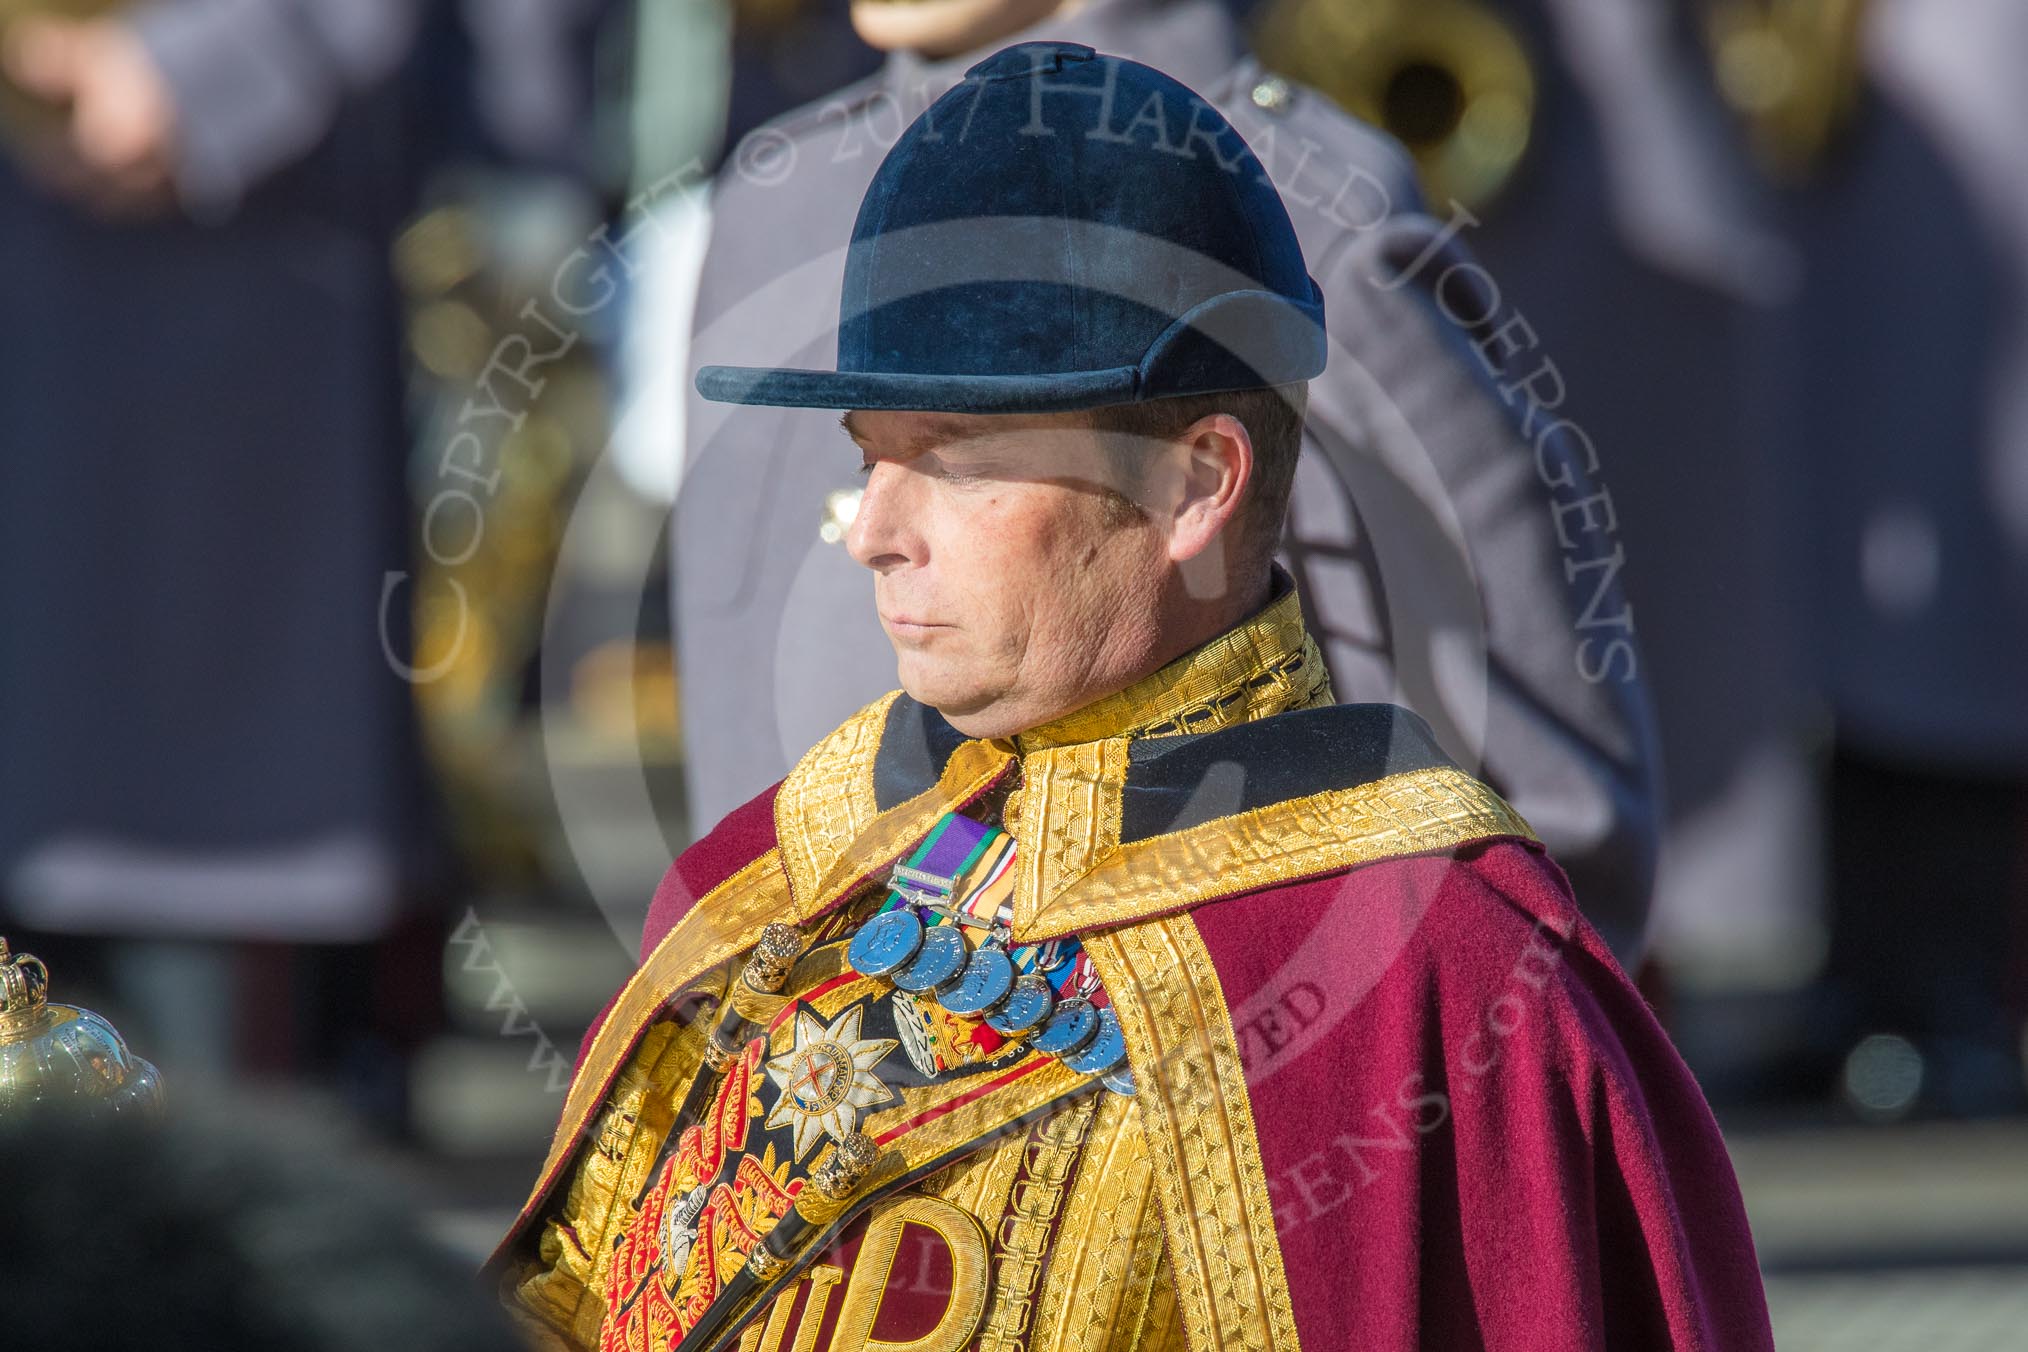 Drum Major Scott Fitzgerald, Coldstream Guards, (Senior Drum Major HQ London District) during Remembrance Sunday Cenotaph Ceremony 2018 at Horse Guards Parade, Westminster, London, 11 November 2018, 11:33.